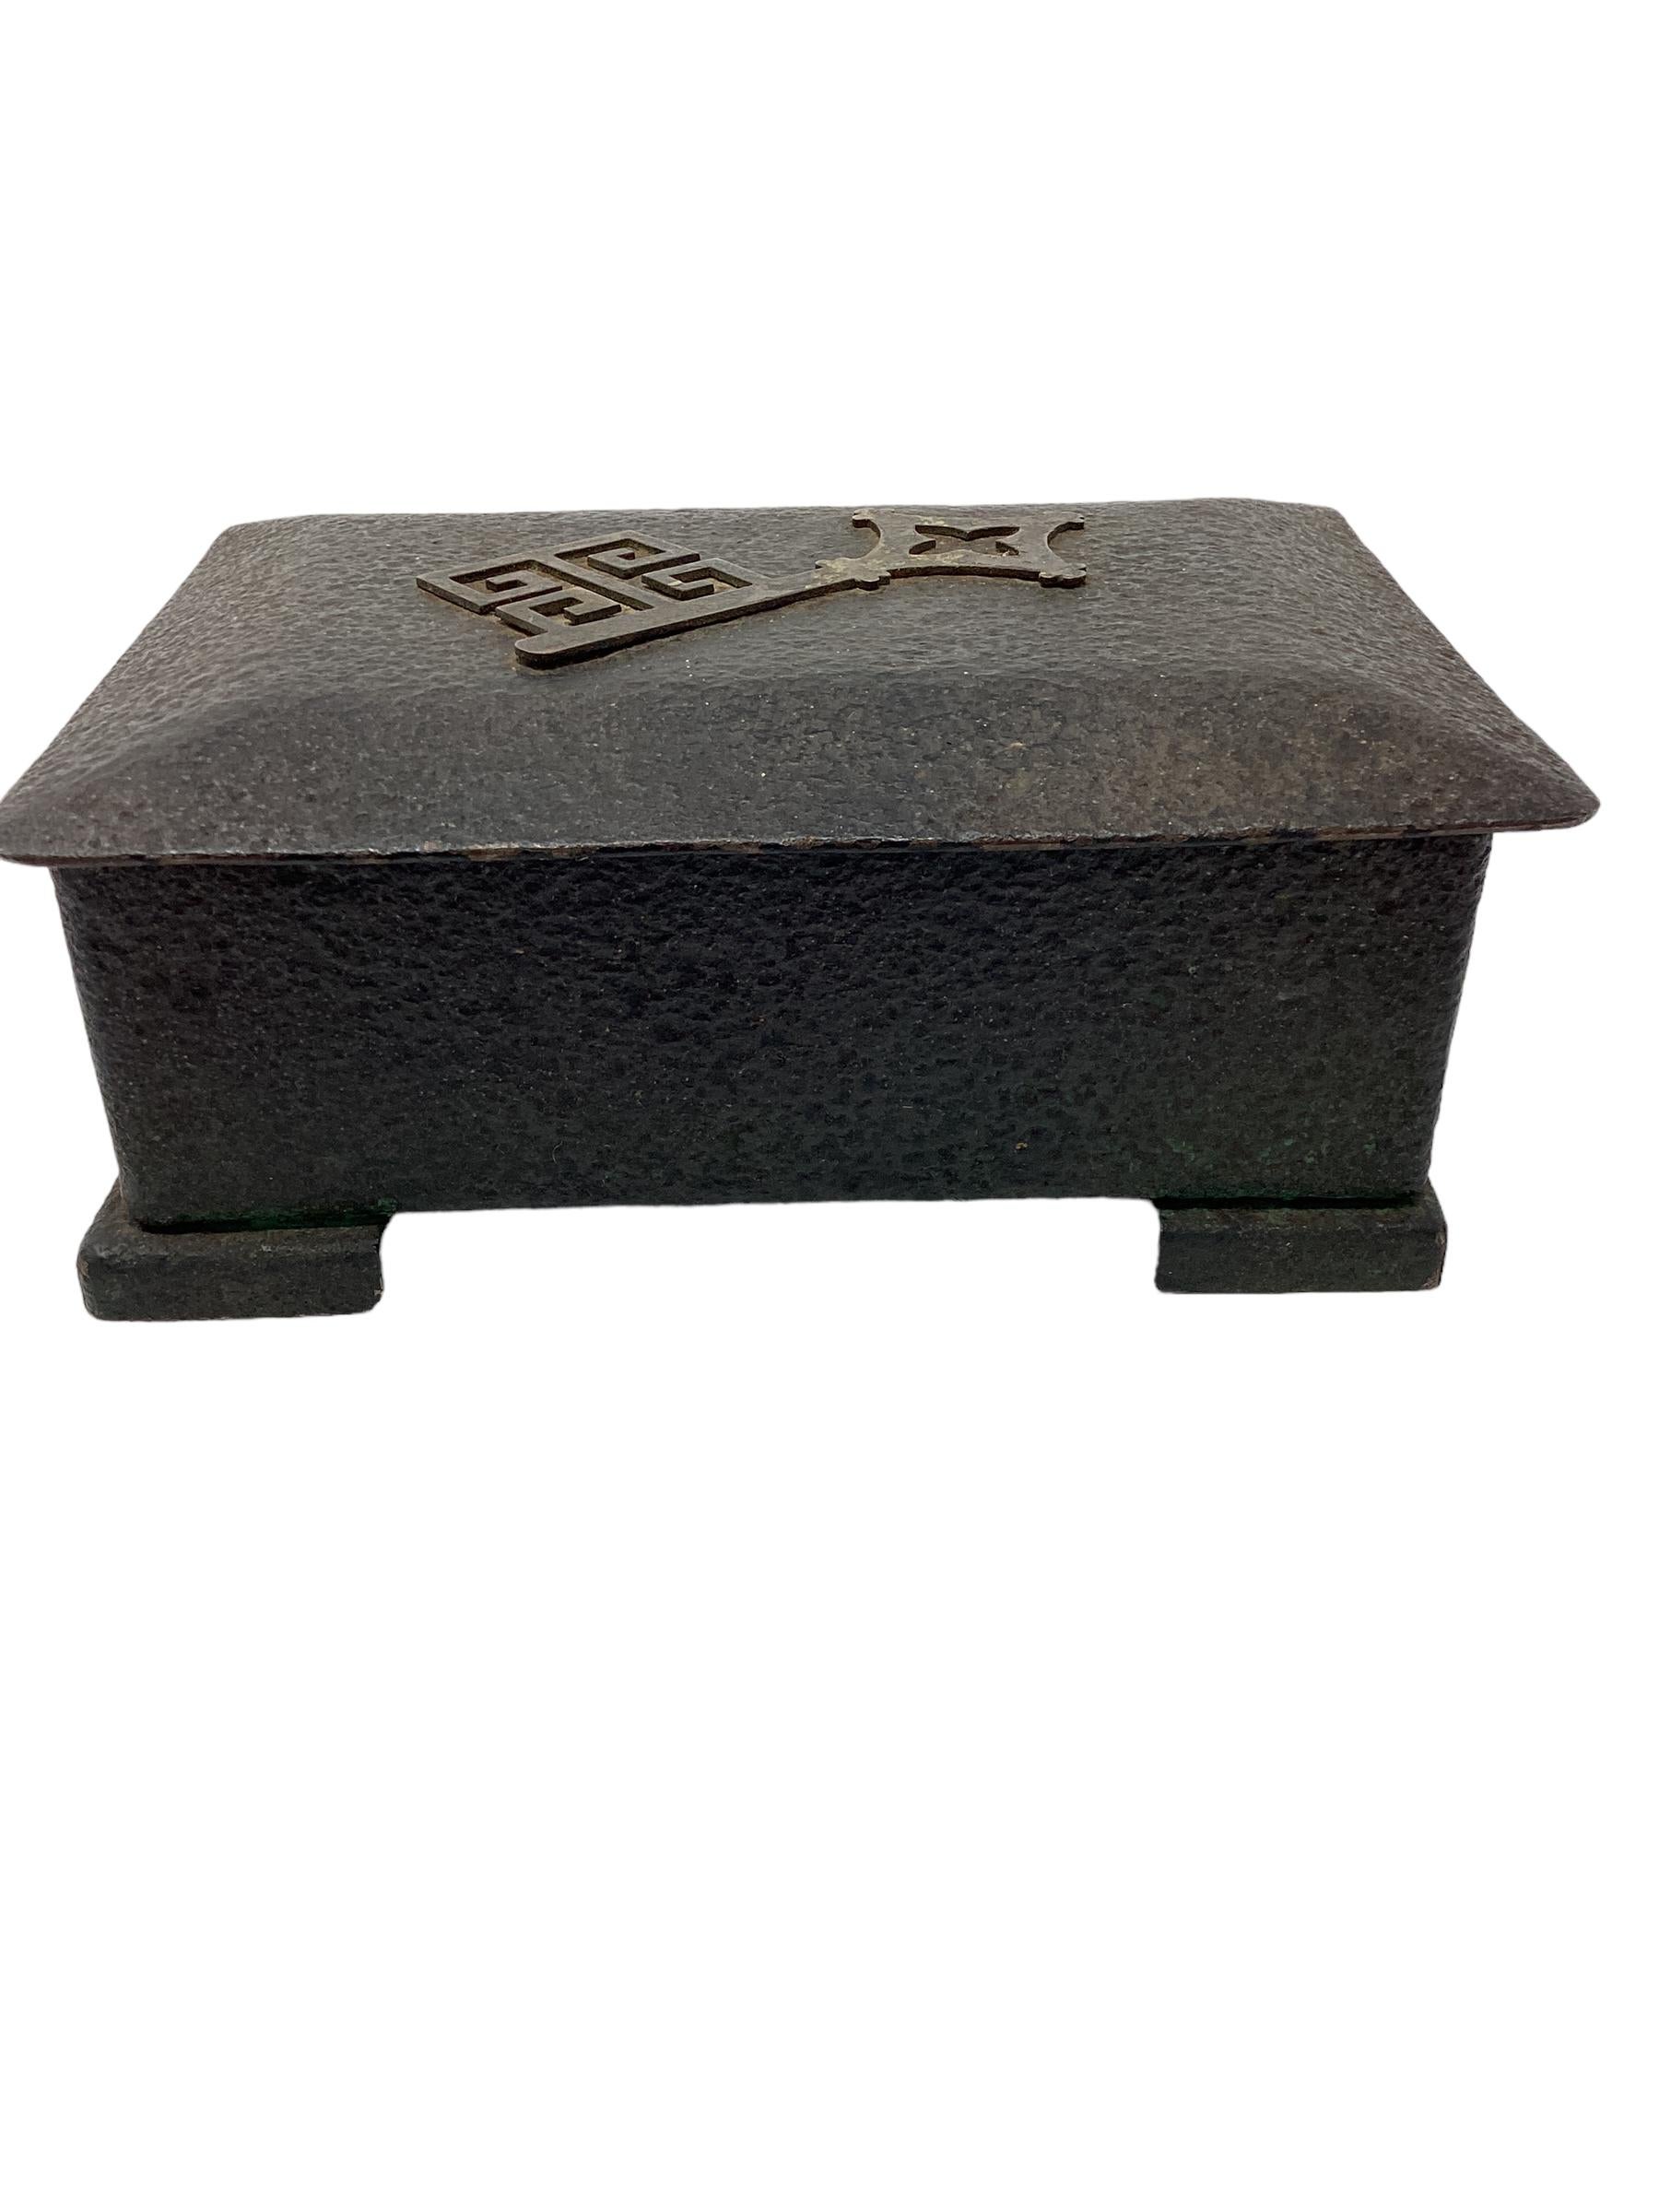 Antique Bronze Verdigris Box with Greek Key  For Sale 1